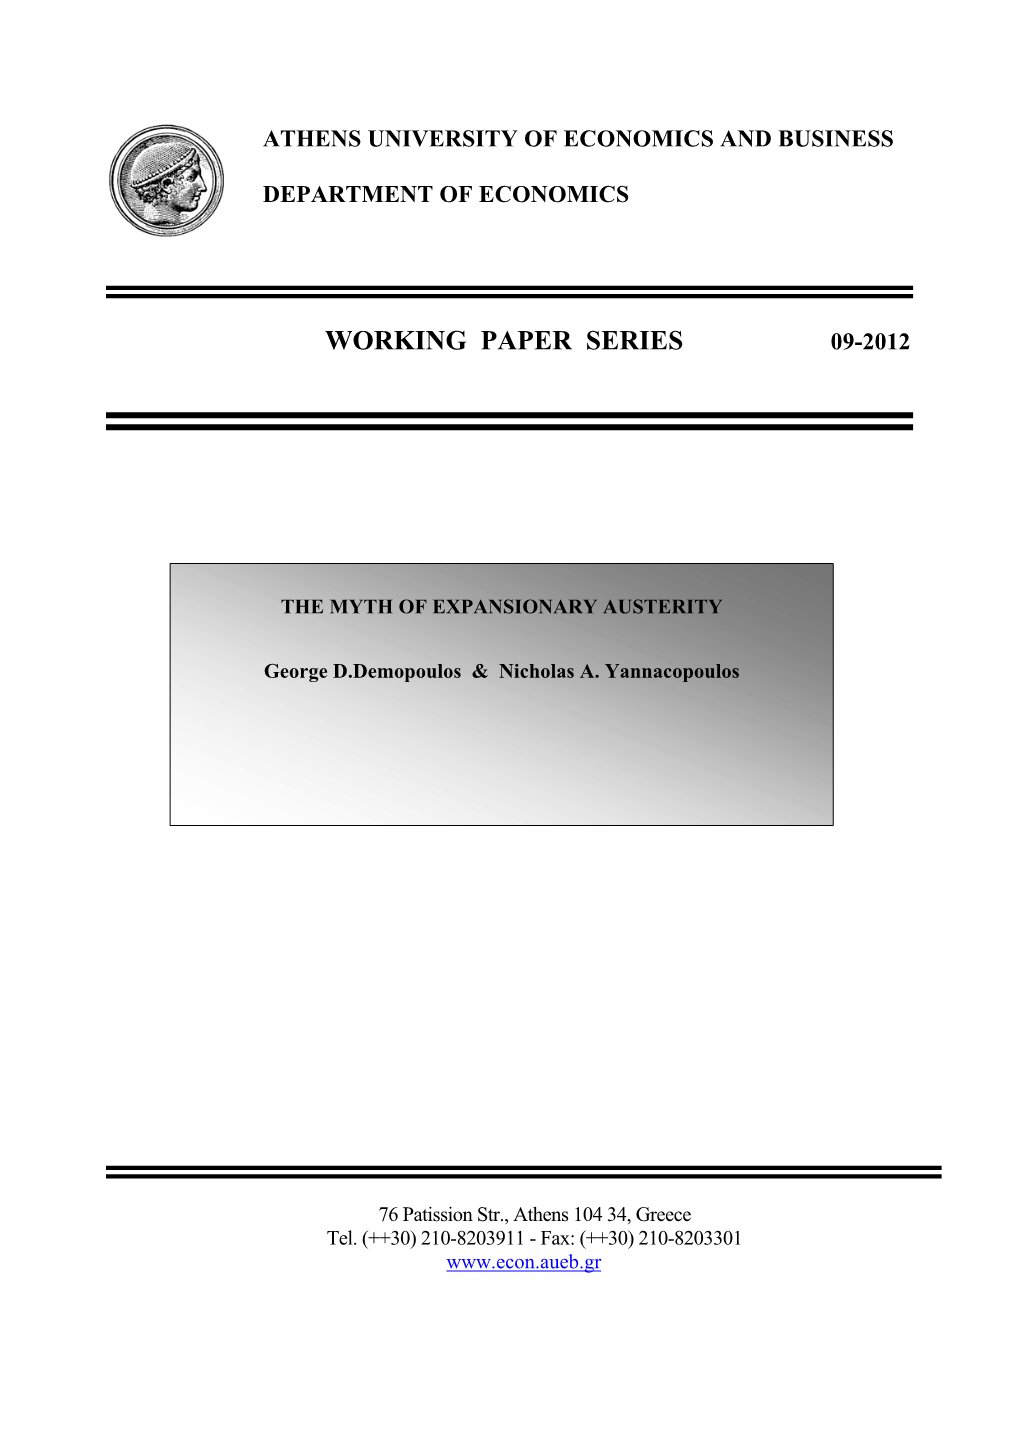 Working Paper Series 09-2012